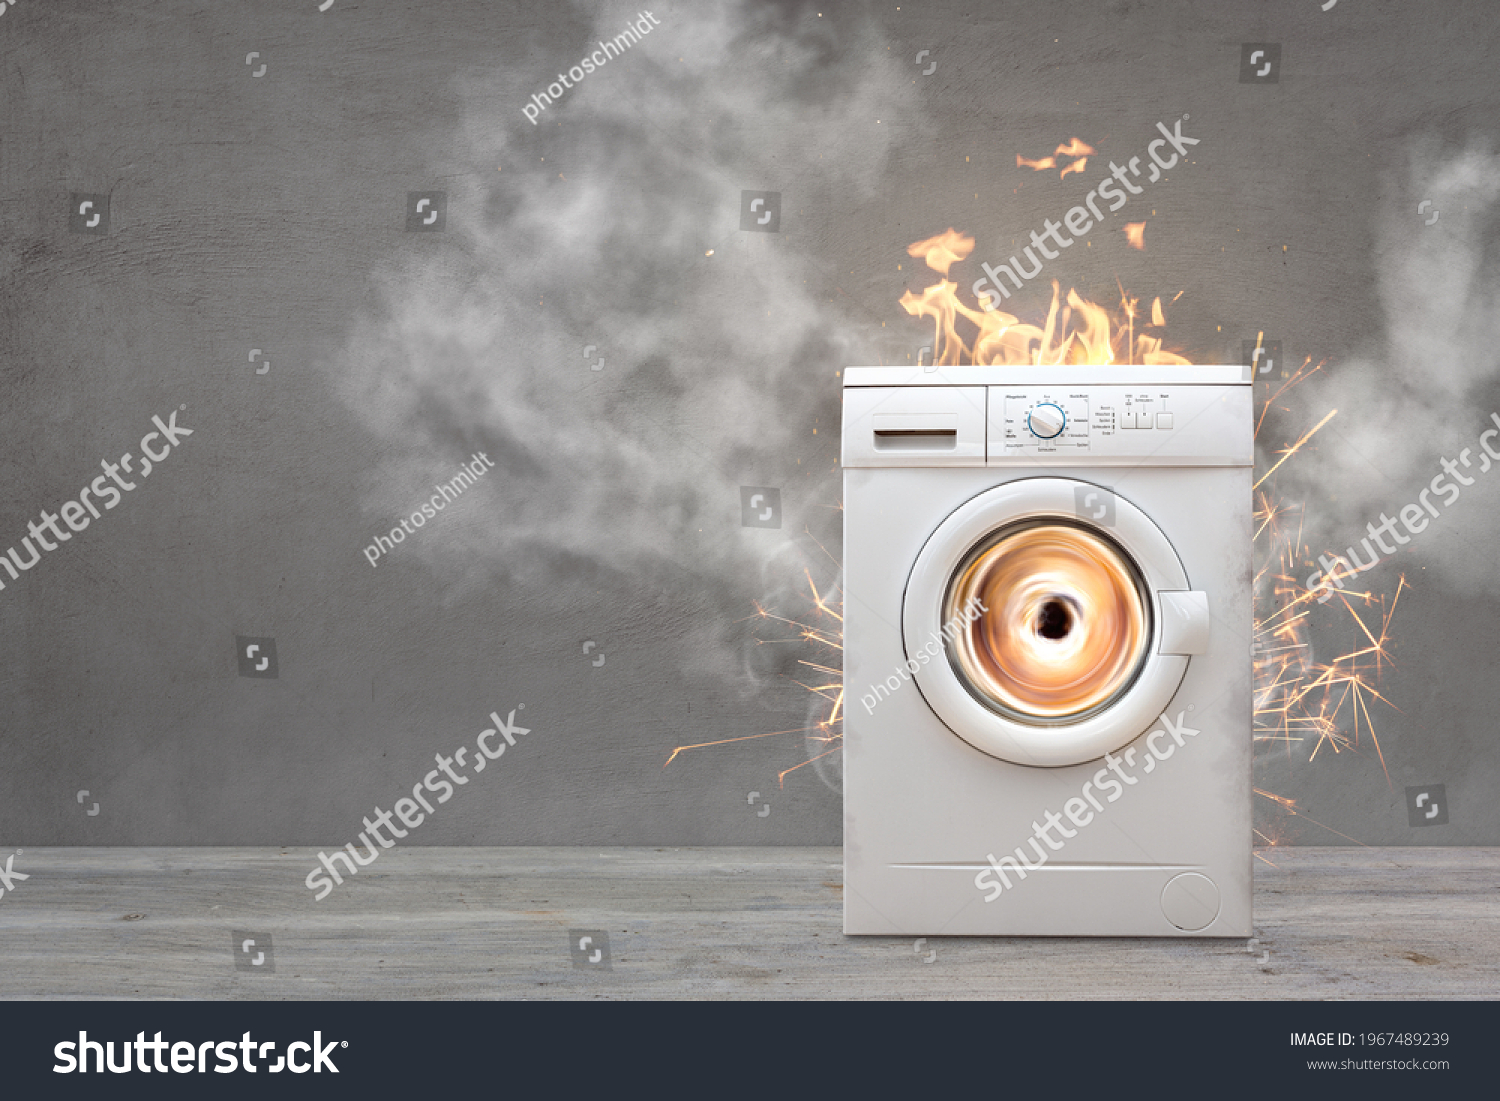 Broken Washing Machine With Smoke And Fire #1967489239